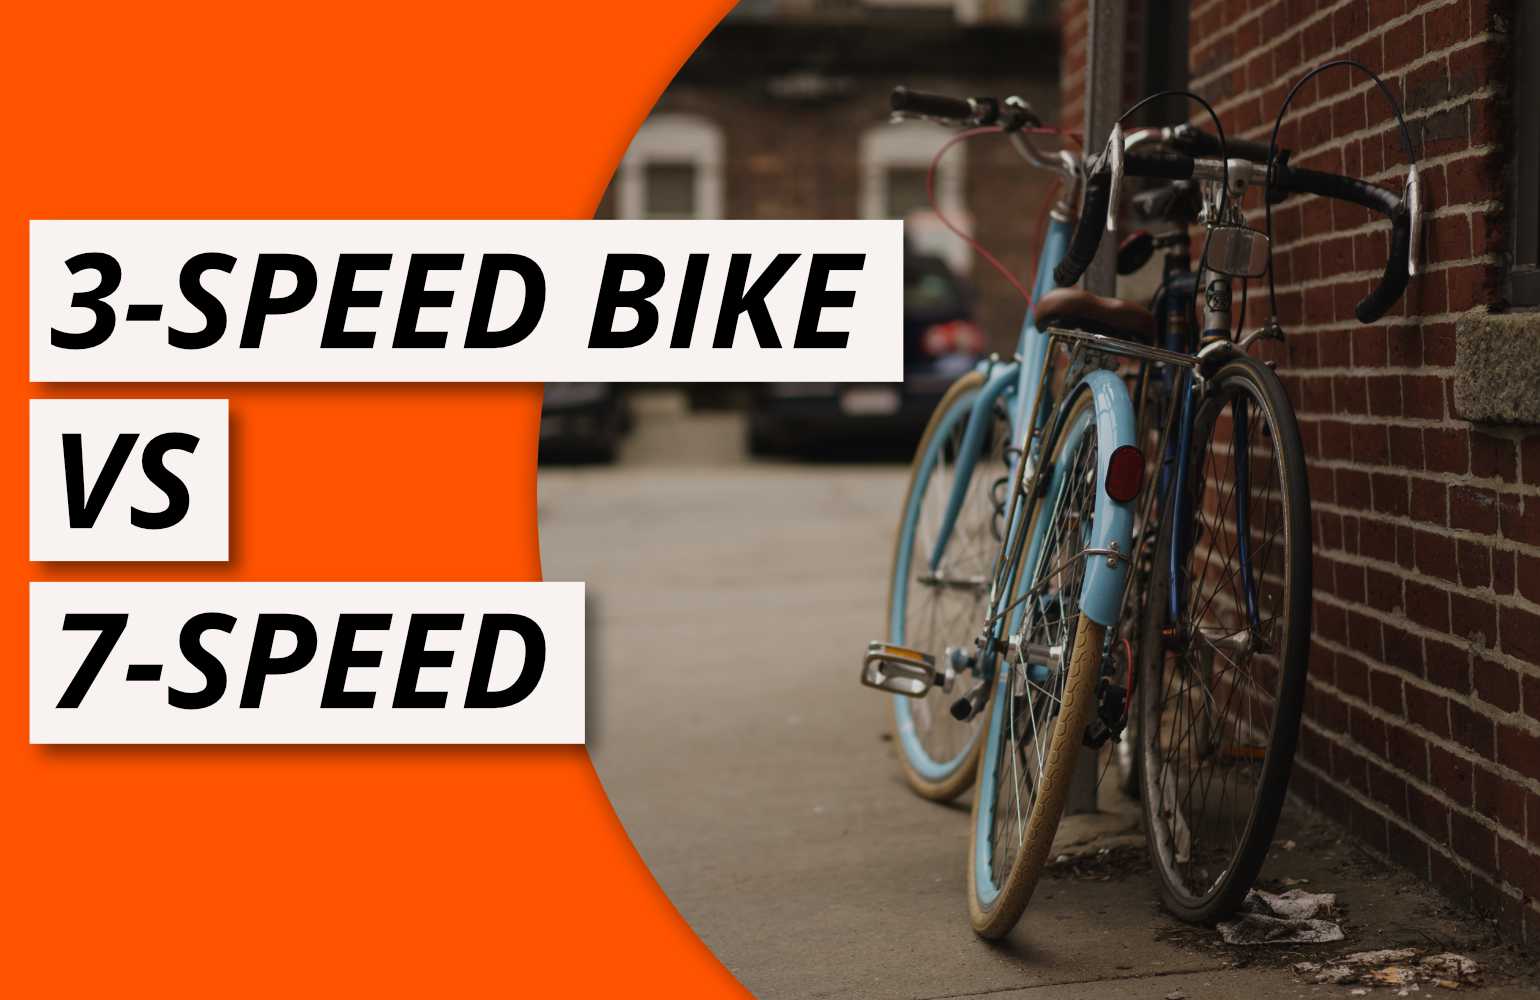 kust Springplank Zwijgend 3 speed bike vs 7 speed - Which one is better? - Popular Cyclist